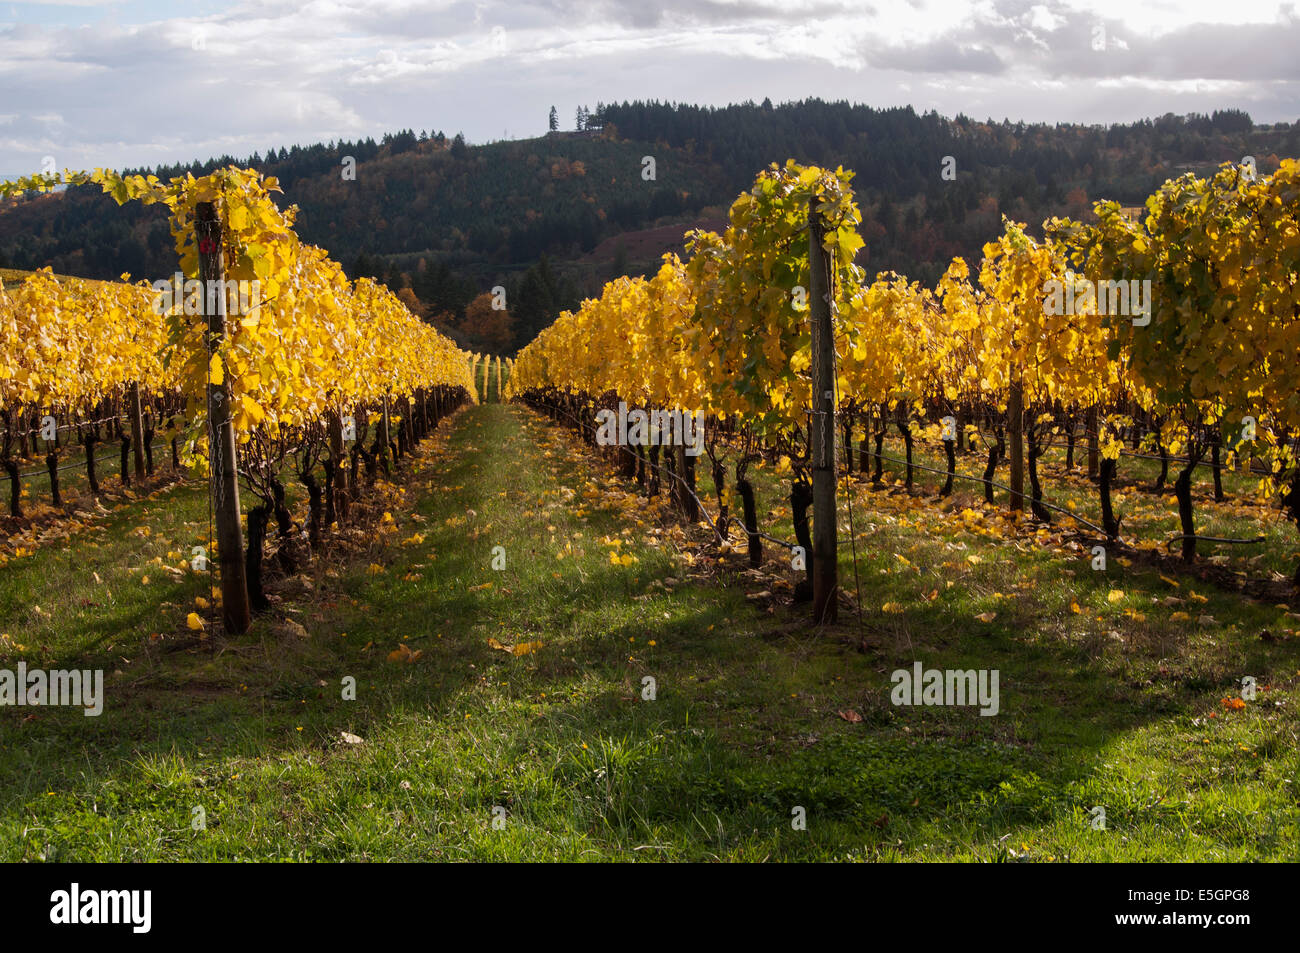 Vineyards in Carlton, Oregon in the Willamette Valley. Stock Photo